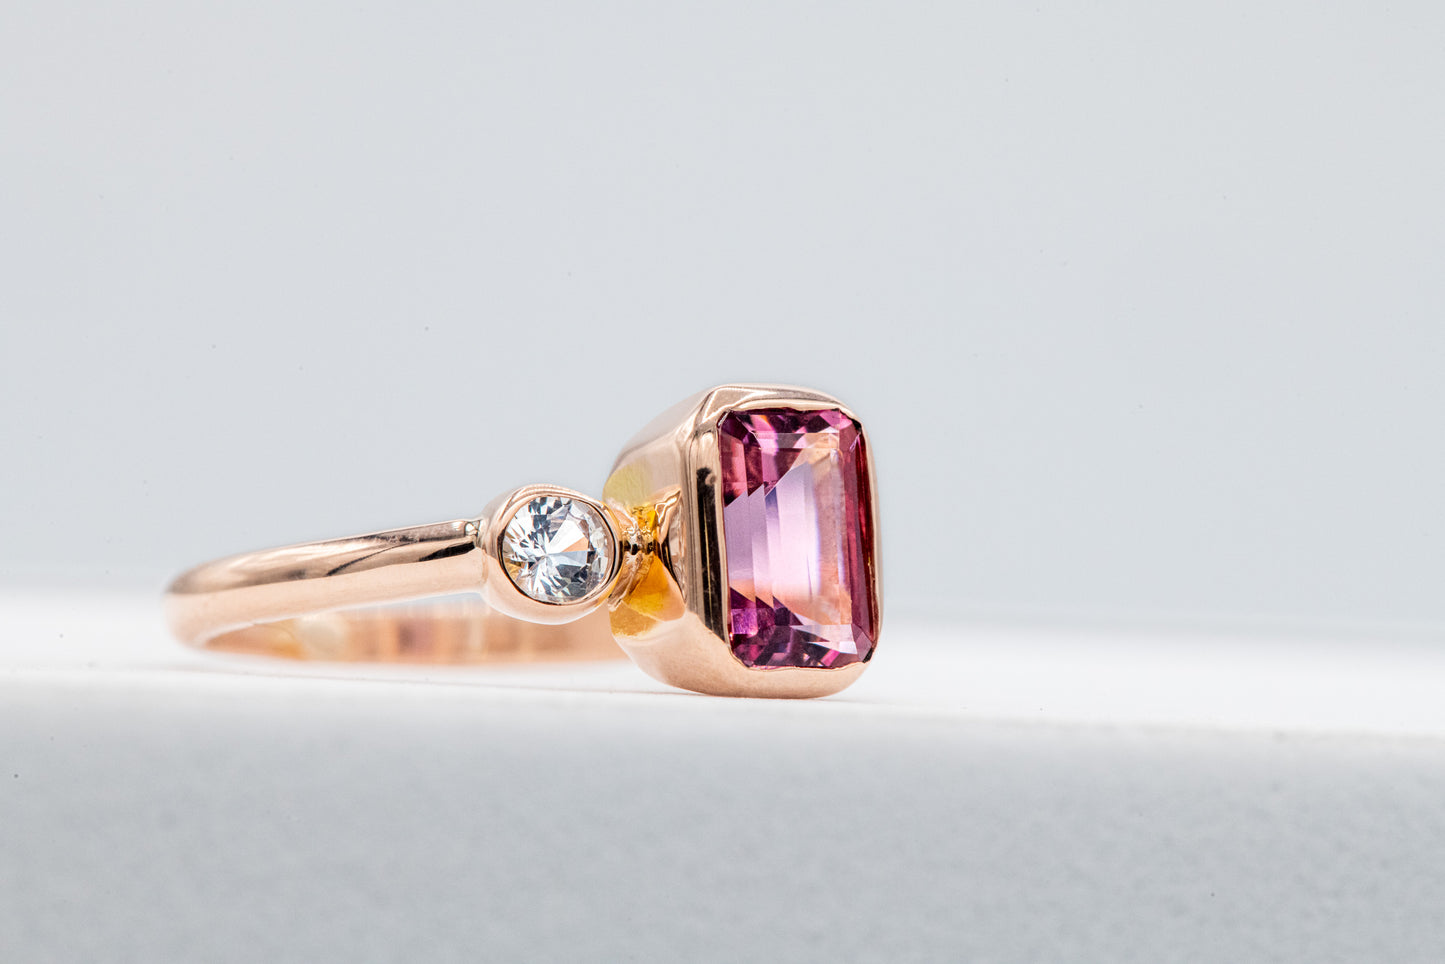 Pink Tourmaline Cassin jewelry.